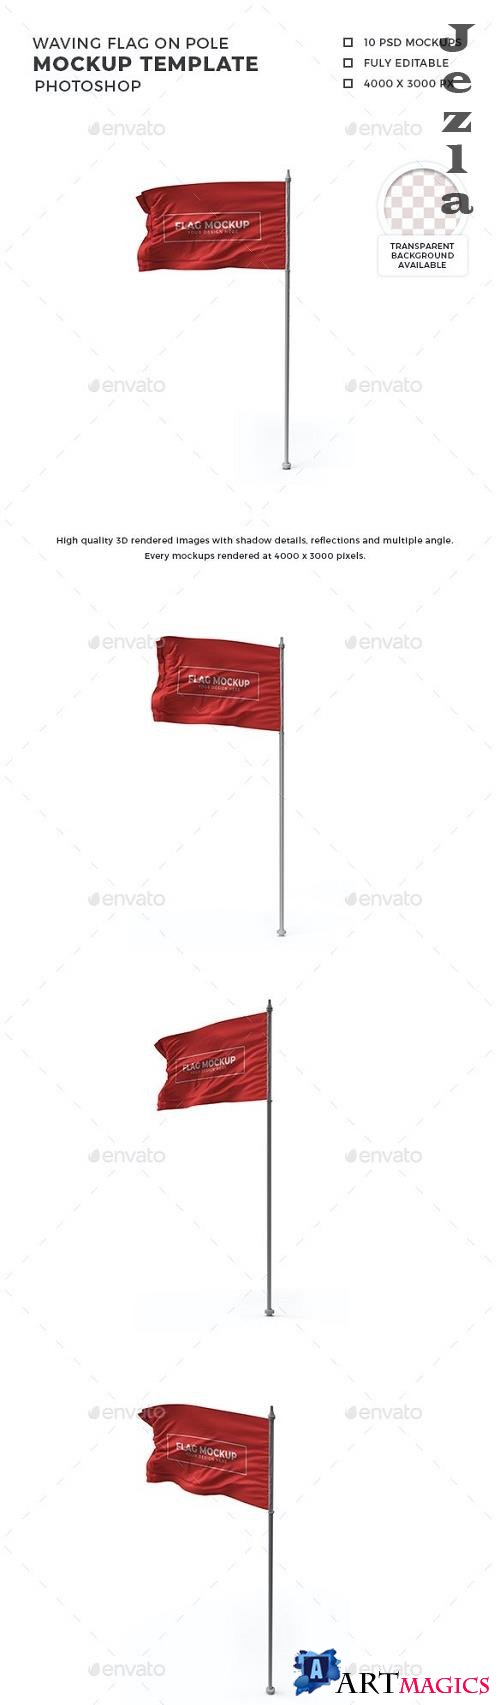 Waving Flag on Pole Mockup Template Set - 30873853